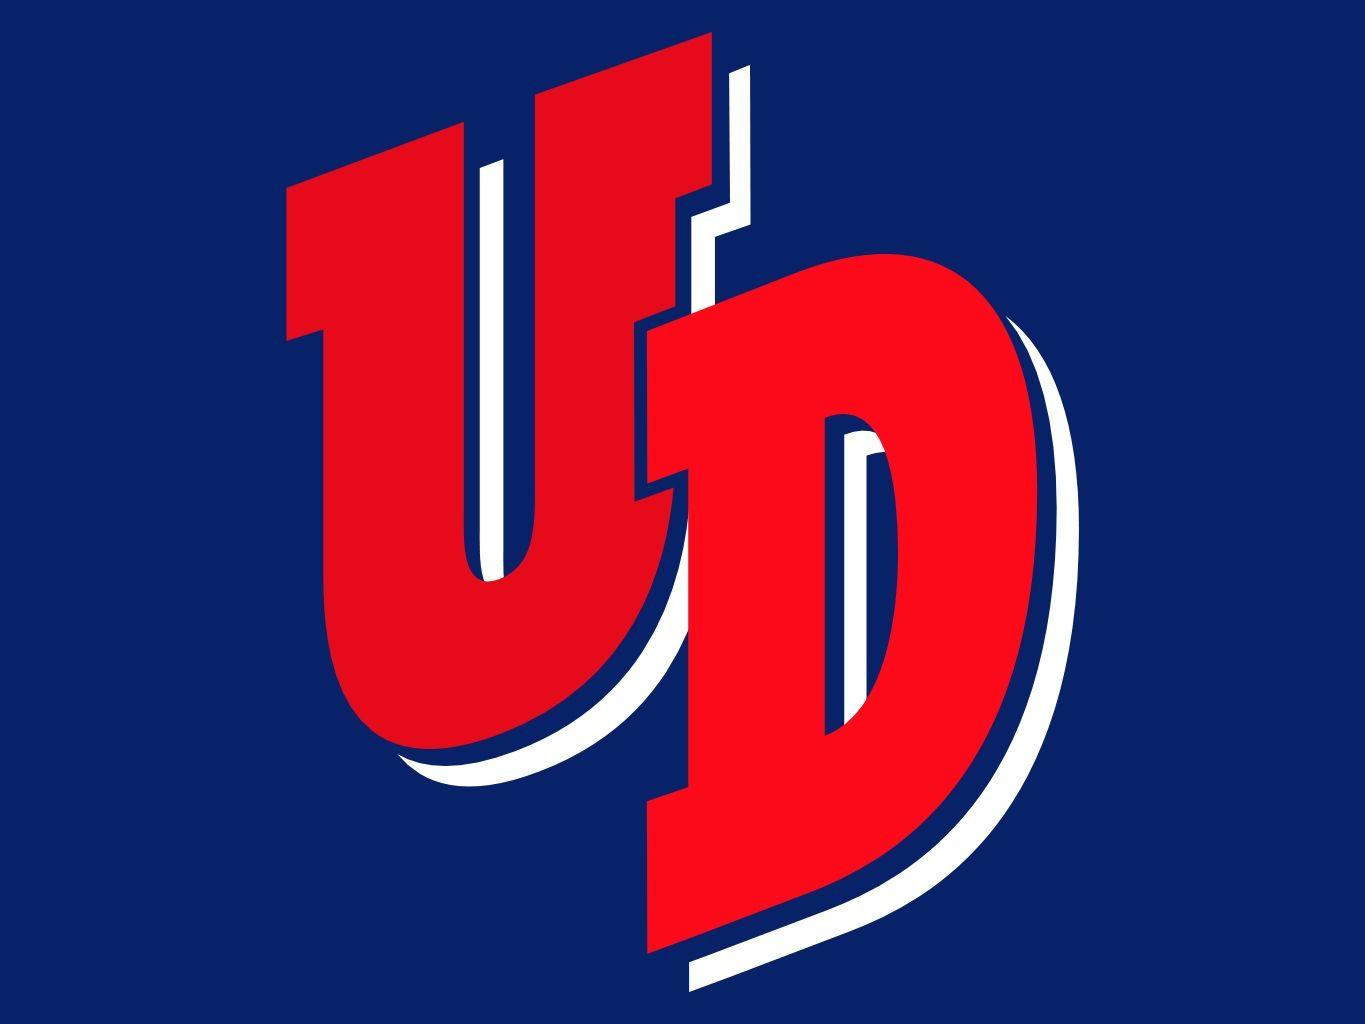 Old Ud Logo - Ud Logos